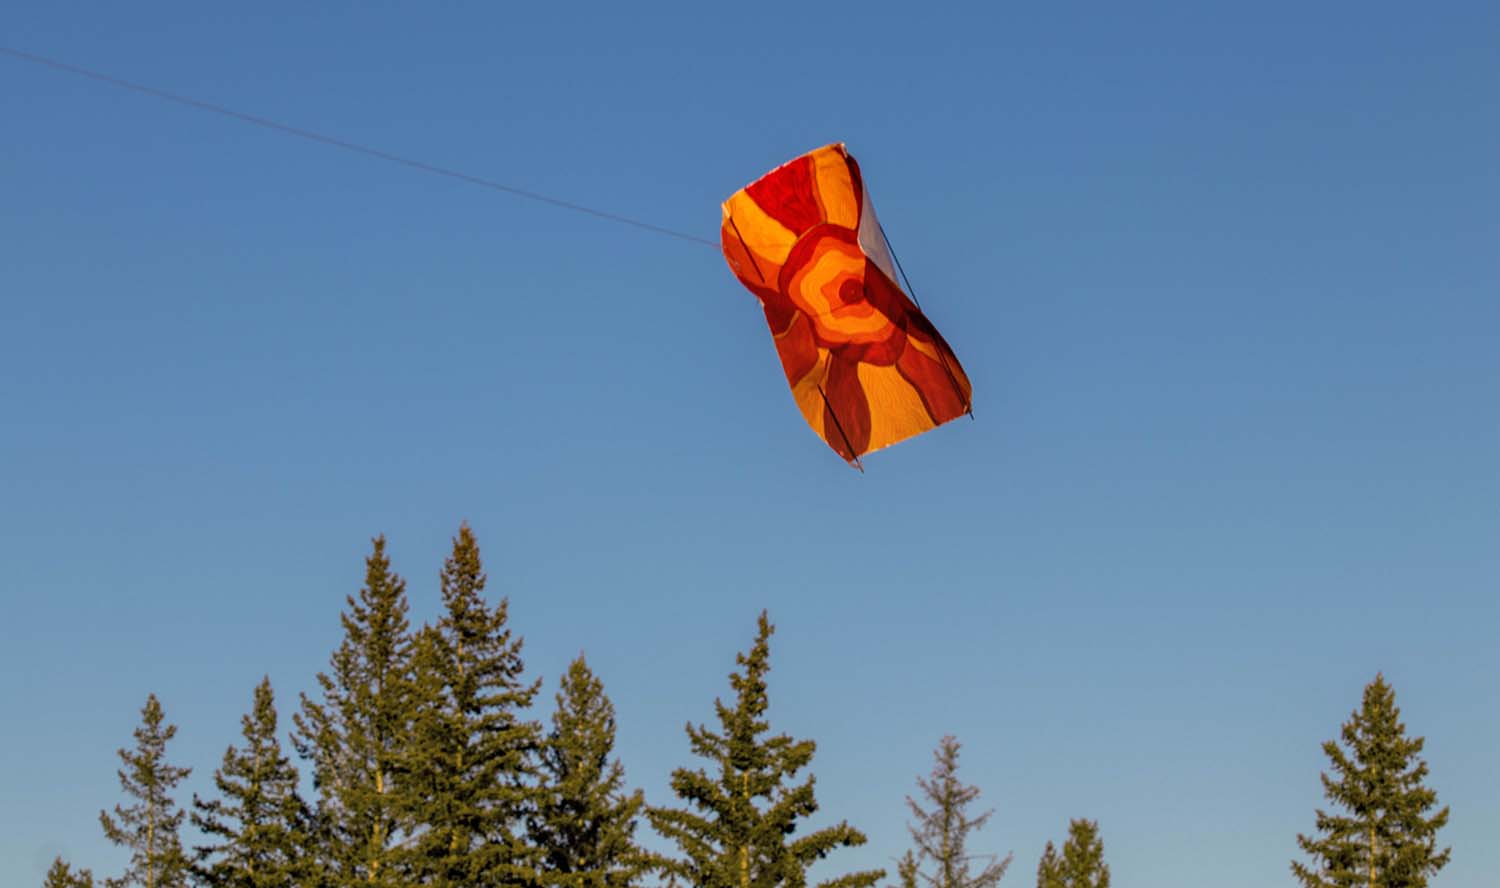 kites in the classroom sun kite over pine trees